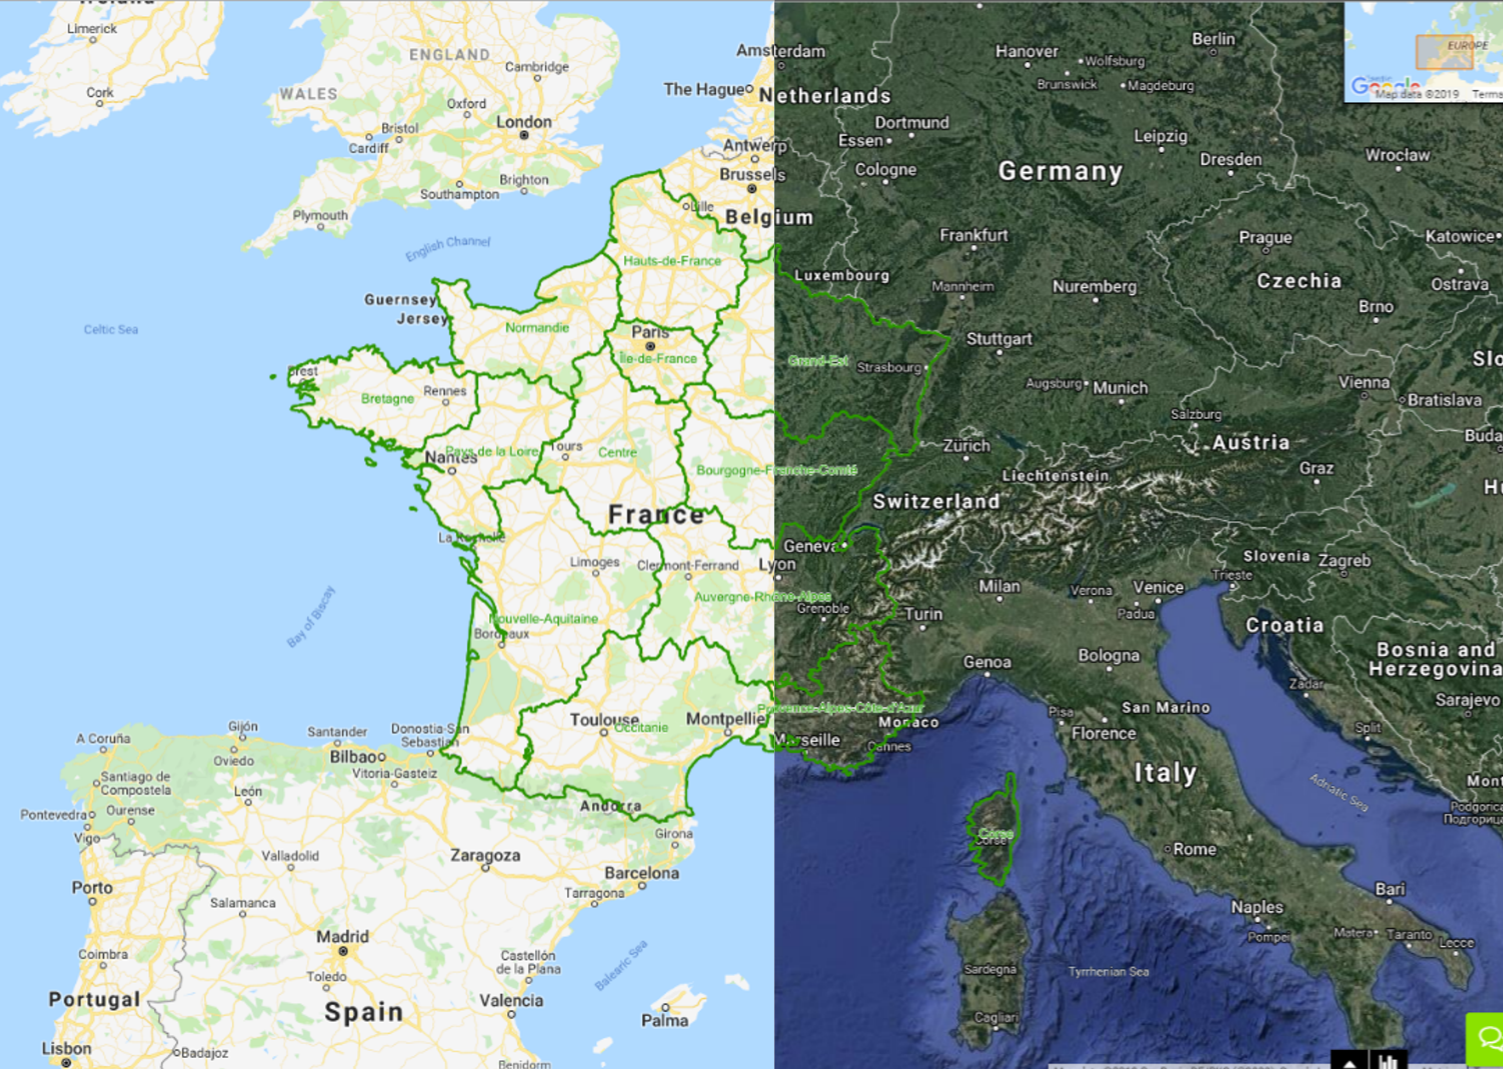 The France Region boundaries